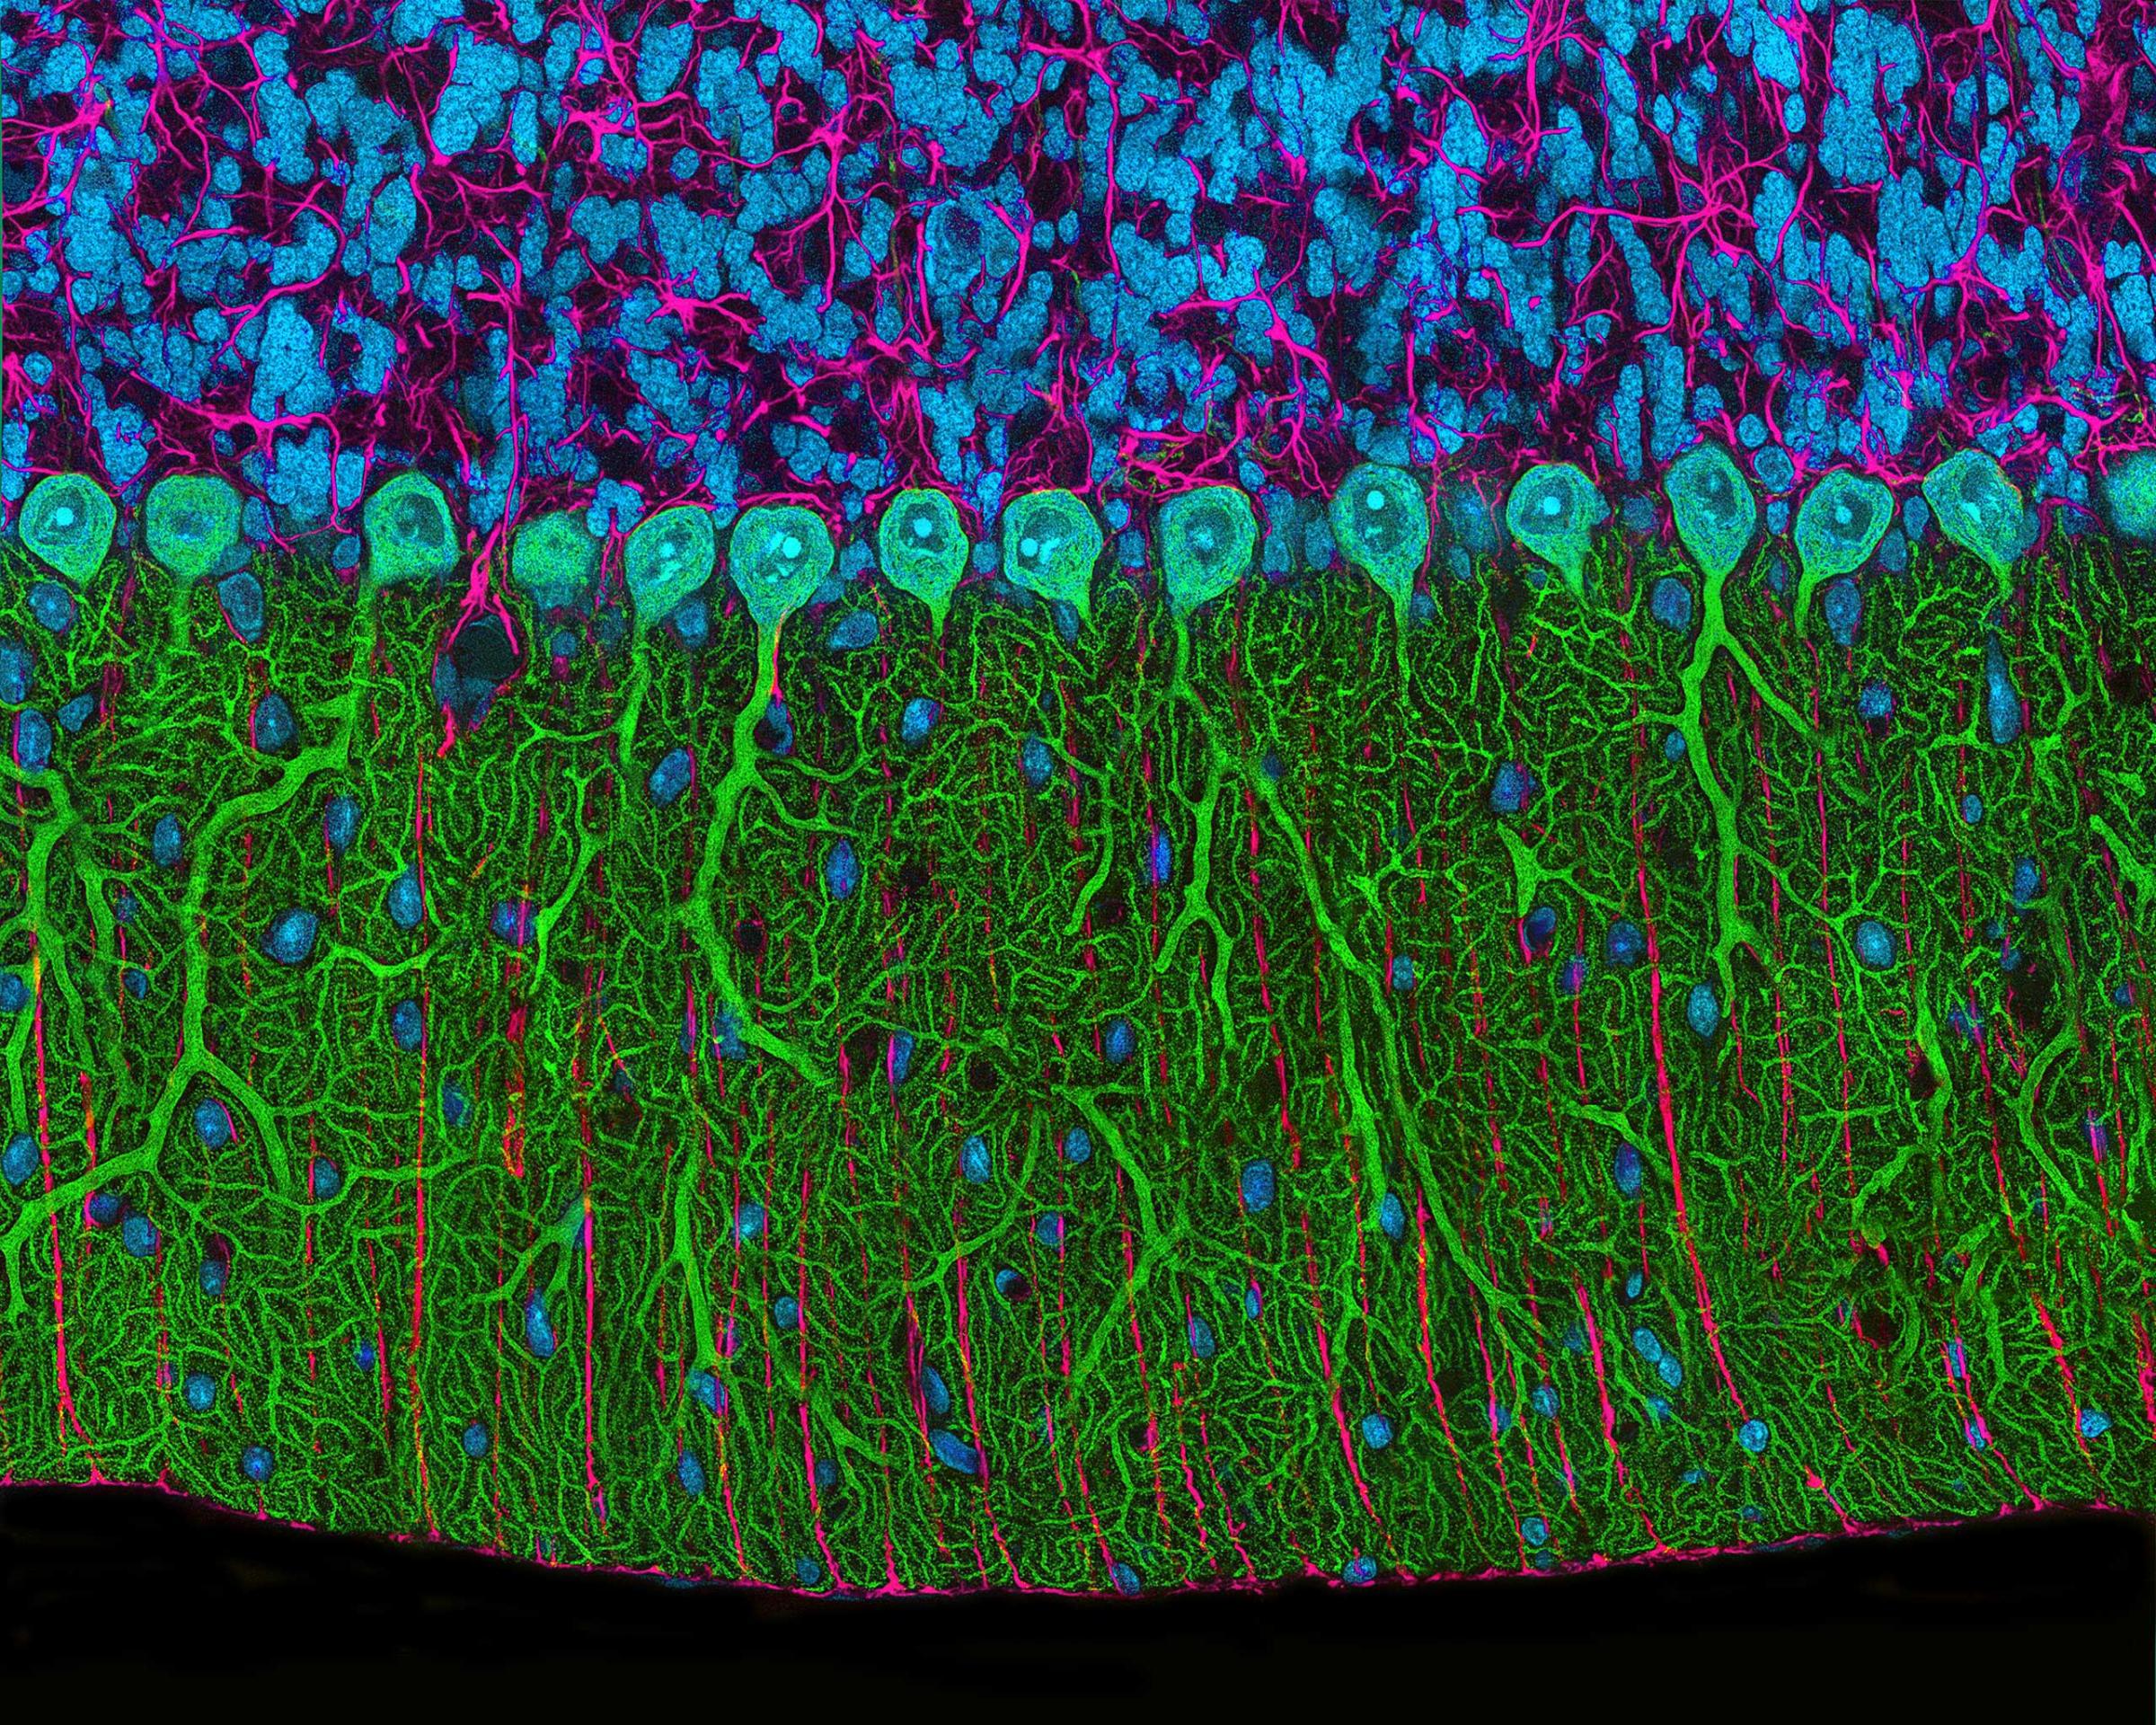 A Rat brain cerebellum at 300x magnification.